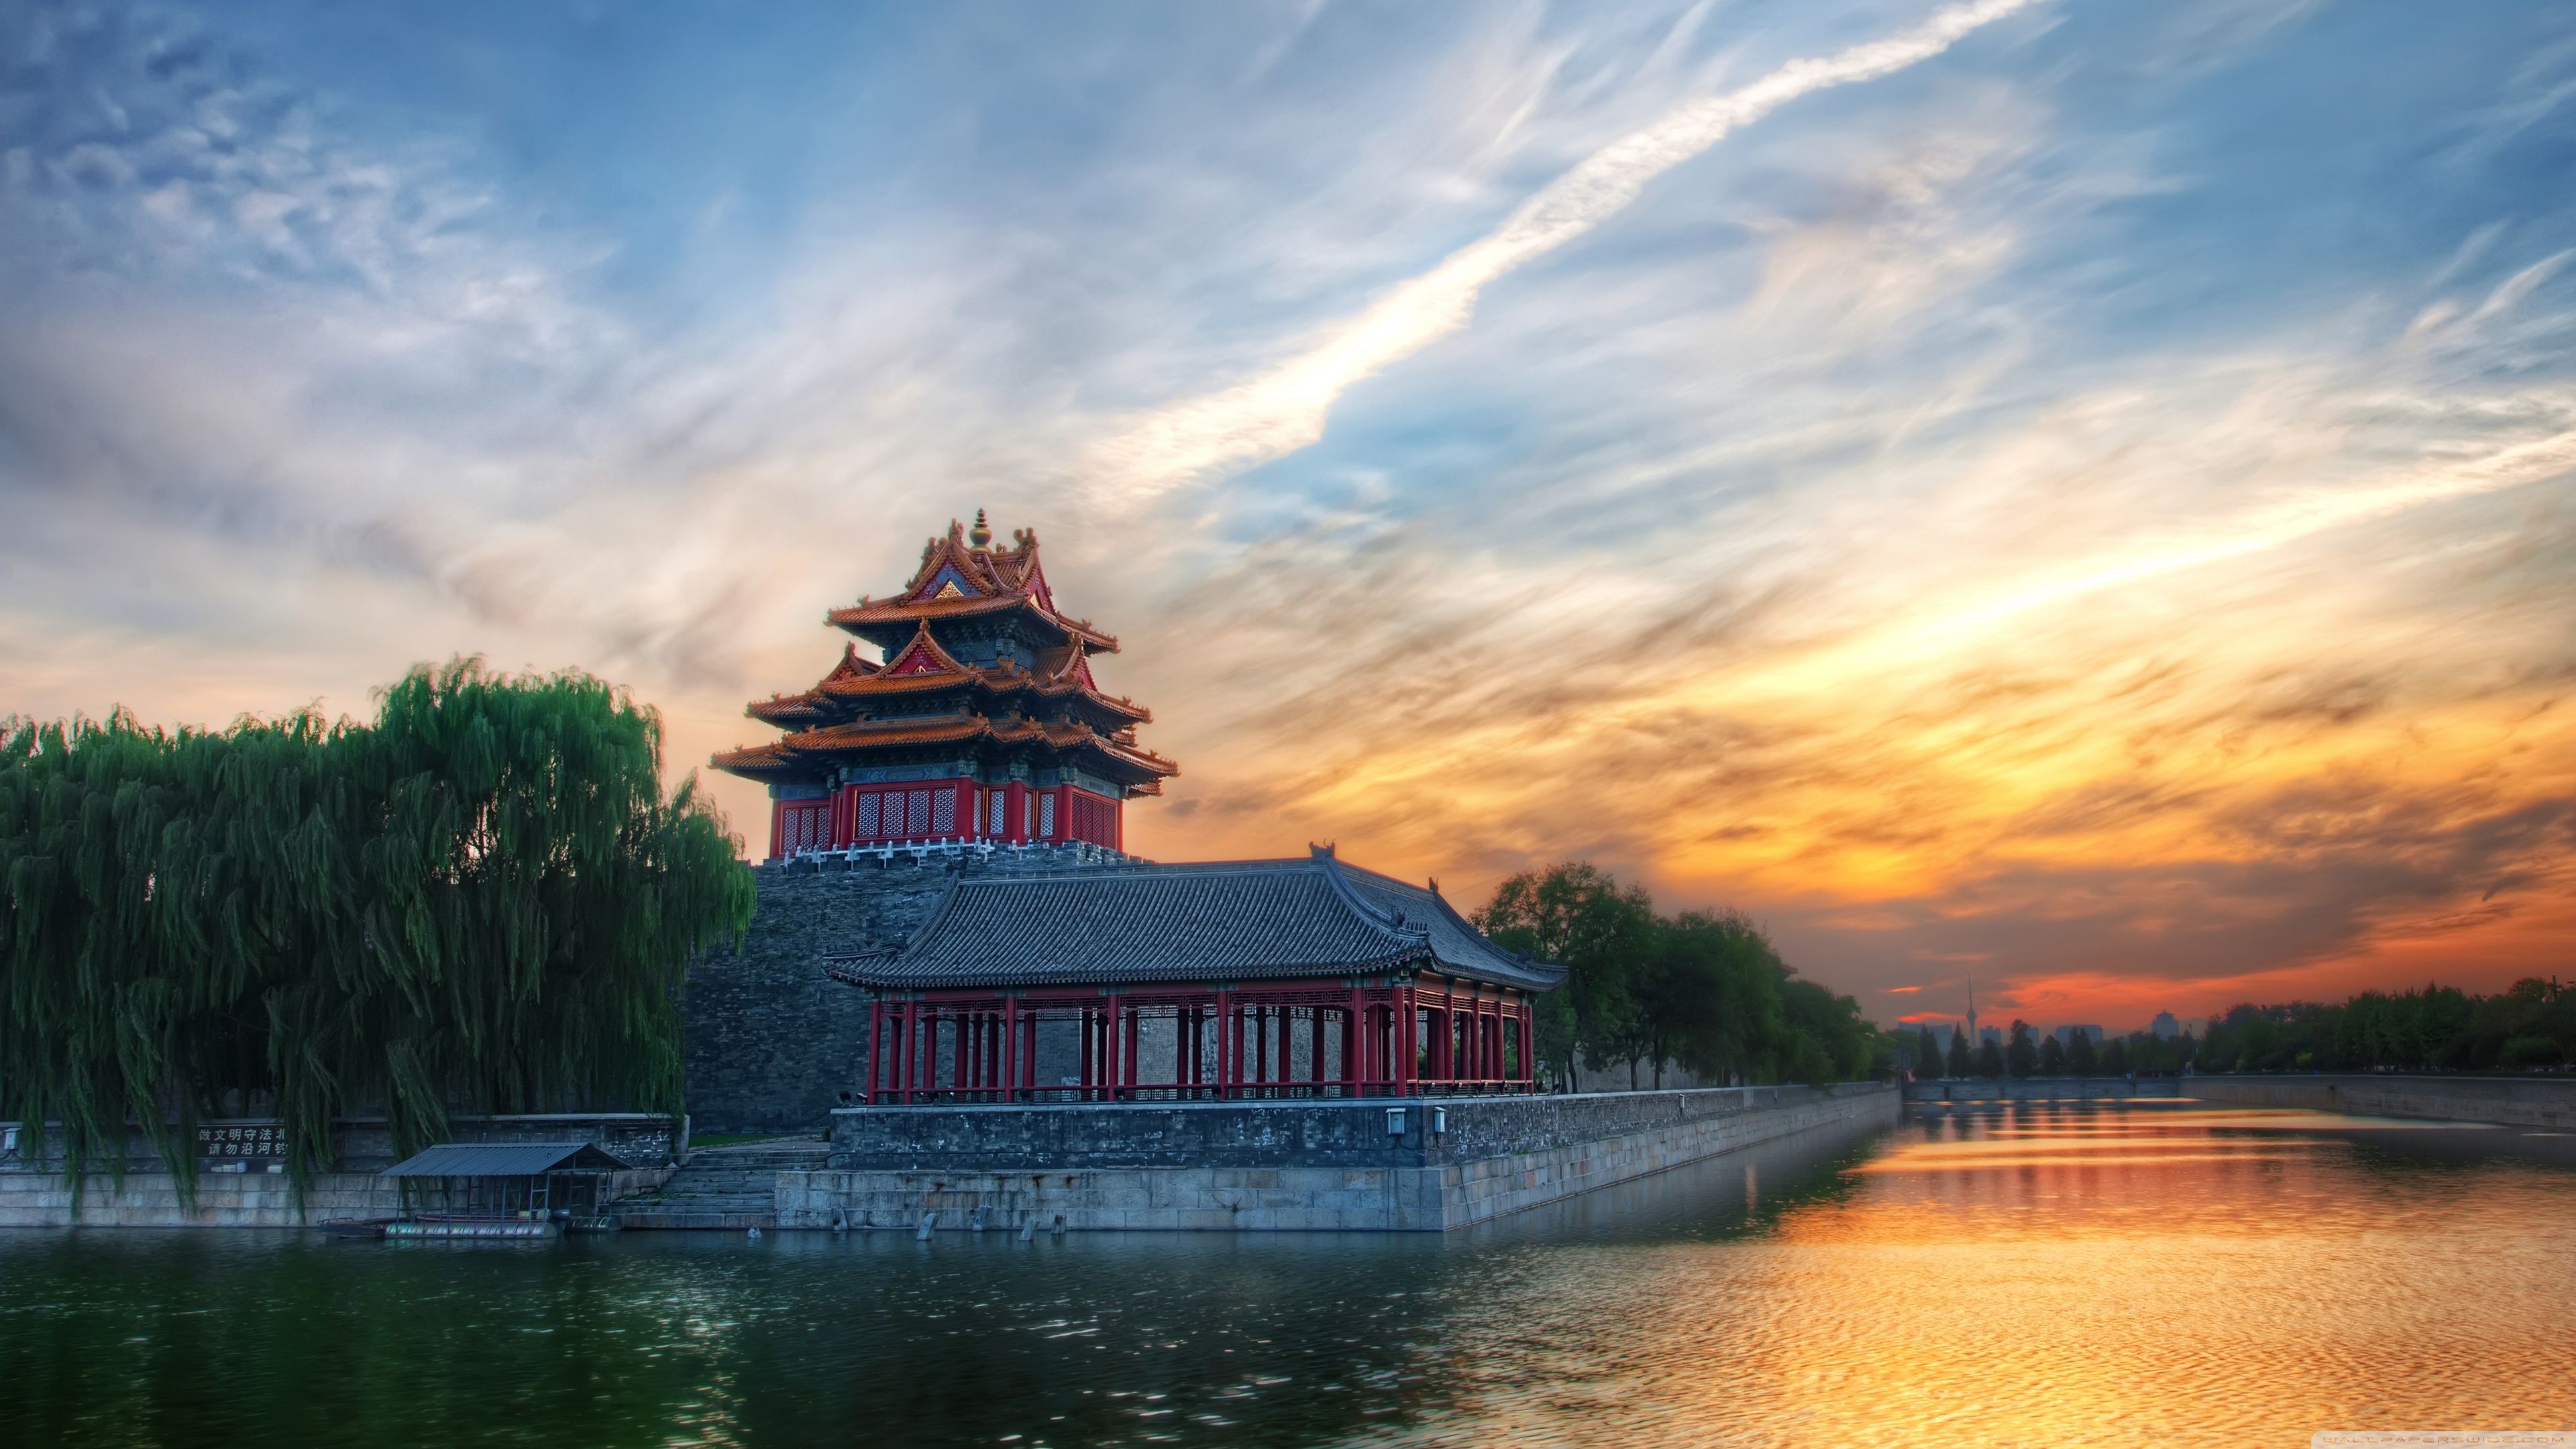 Forbidden City, Beijing, China Ultra HD Desktop Background Wallpaper for 4K UHD TV, Multi Display, Dual Monitor, Tablet